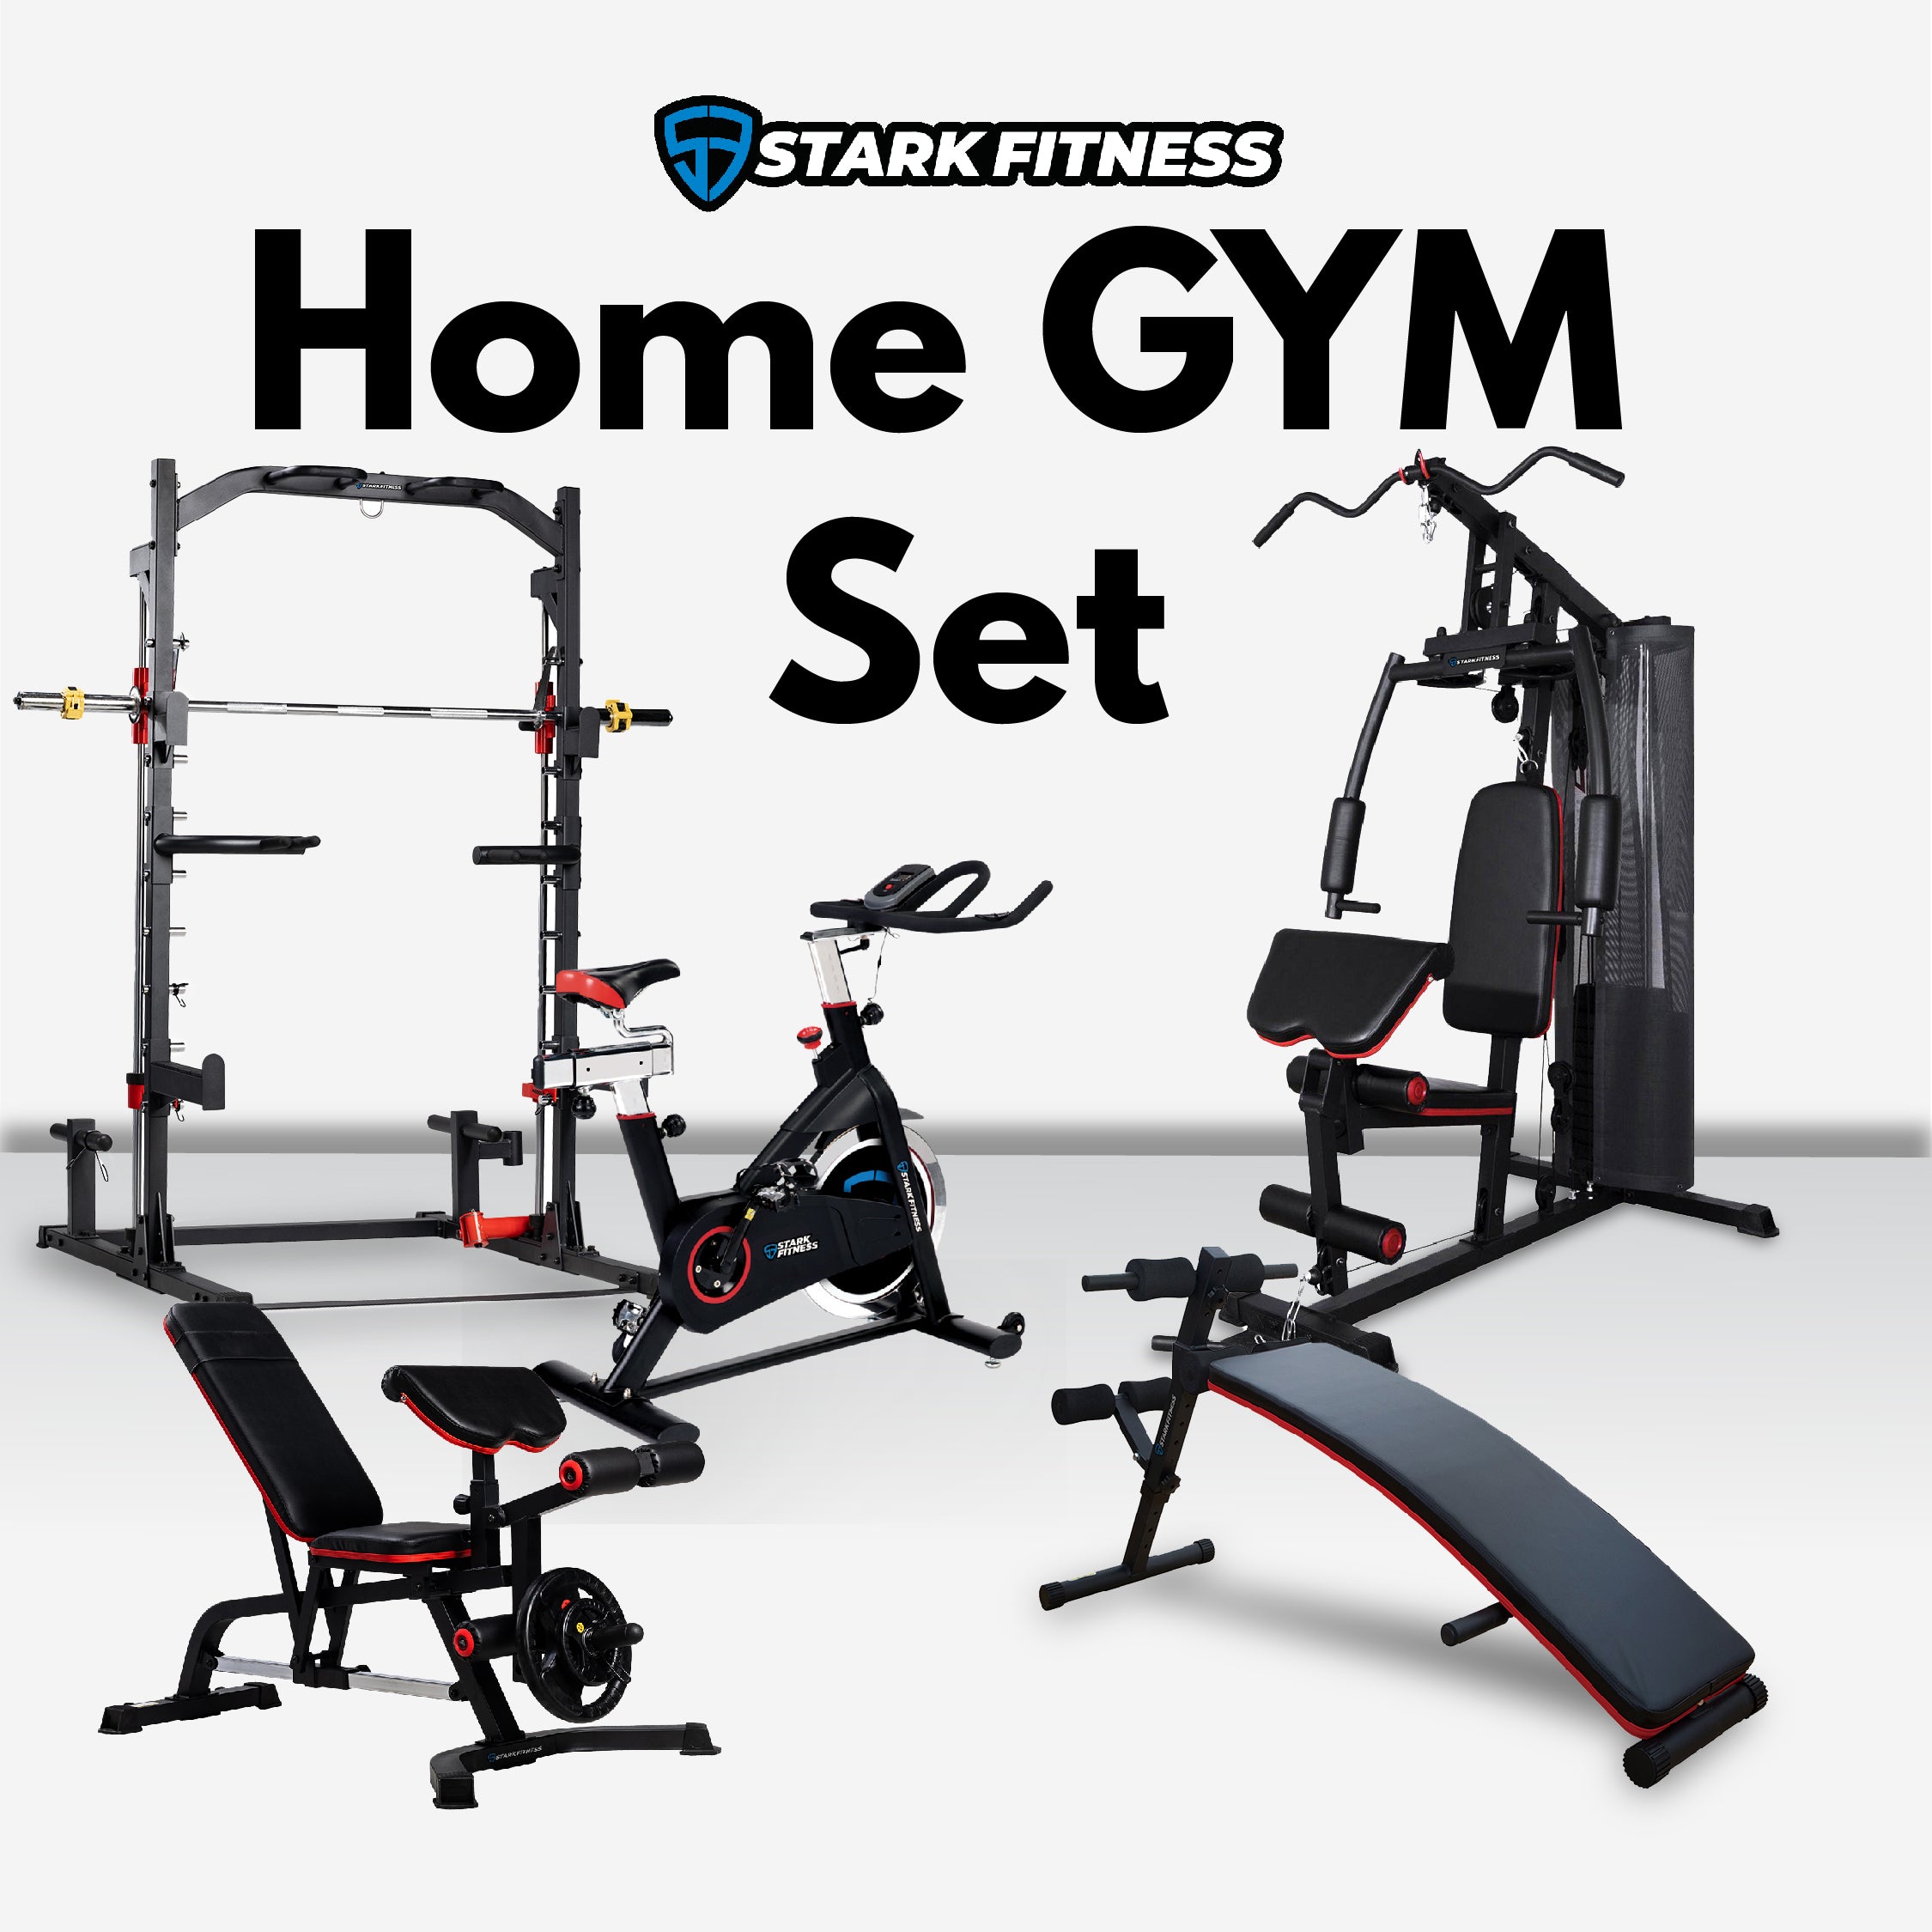 Home Gym Set – Stark Fitness